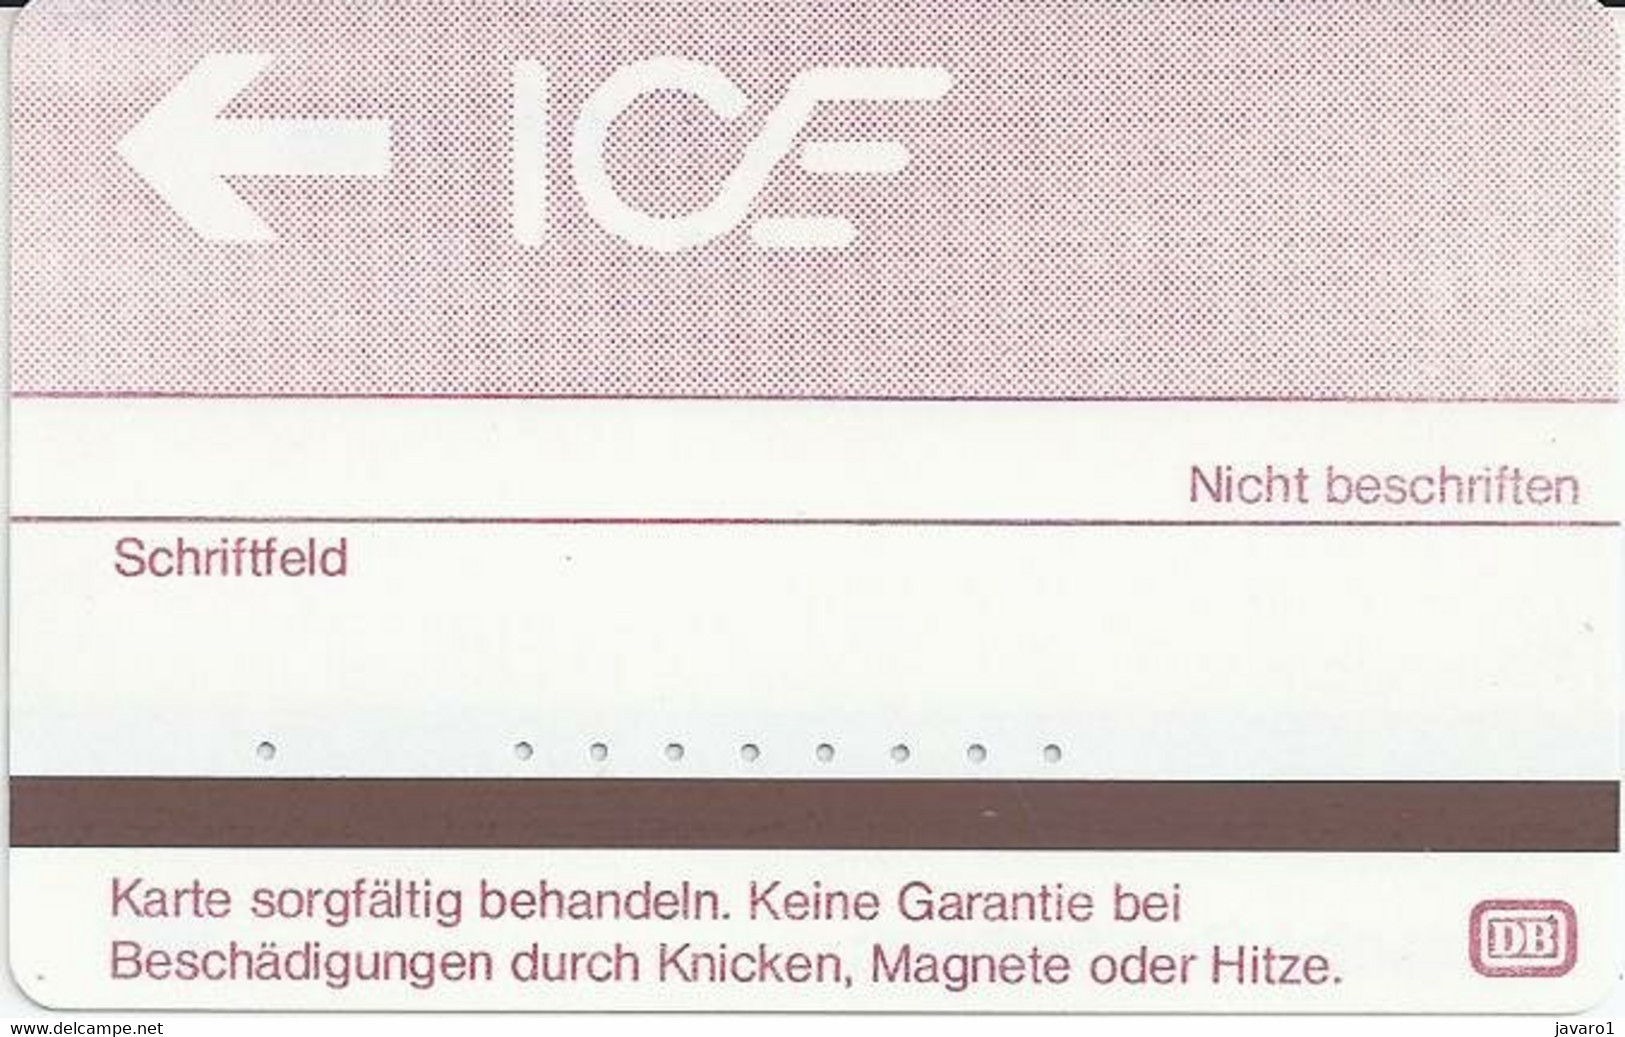 GERMANY : TI1A ICE Wertkarte DM 5,- (DB) USED - Precursori